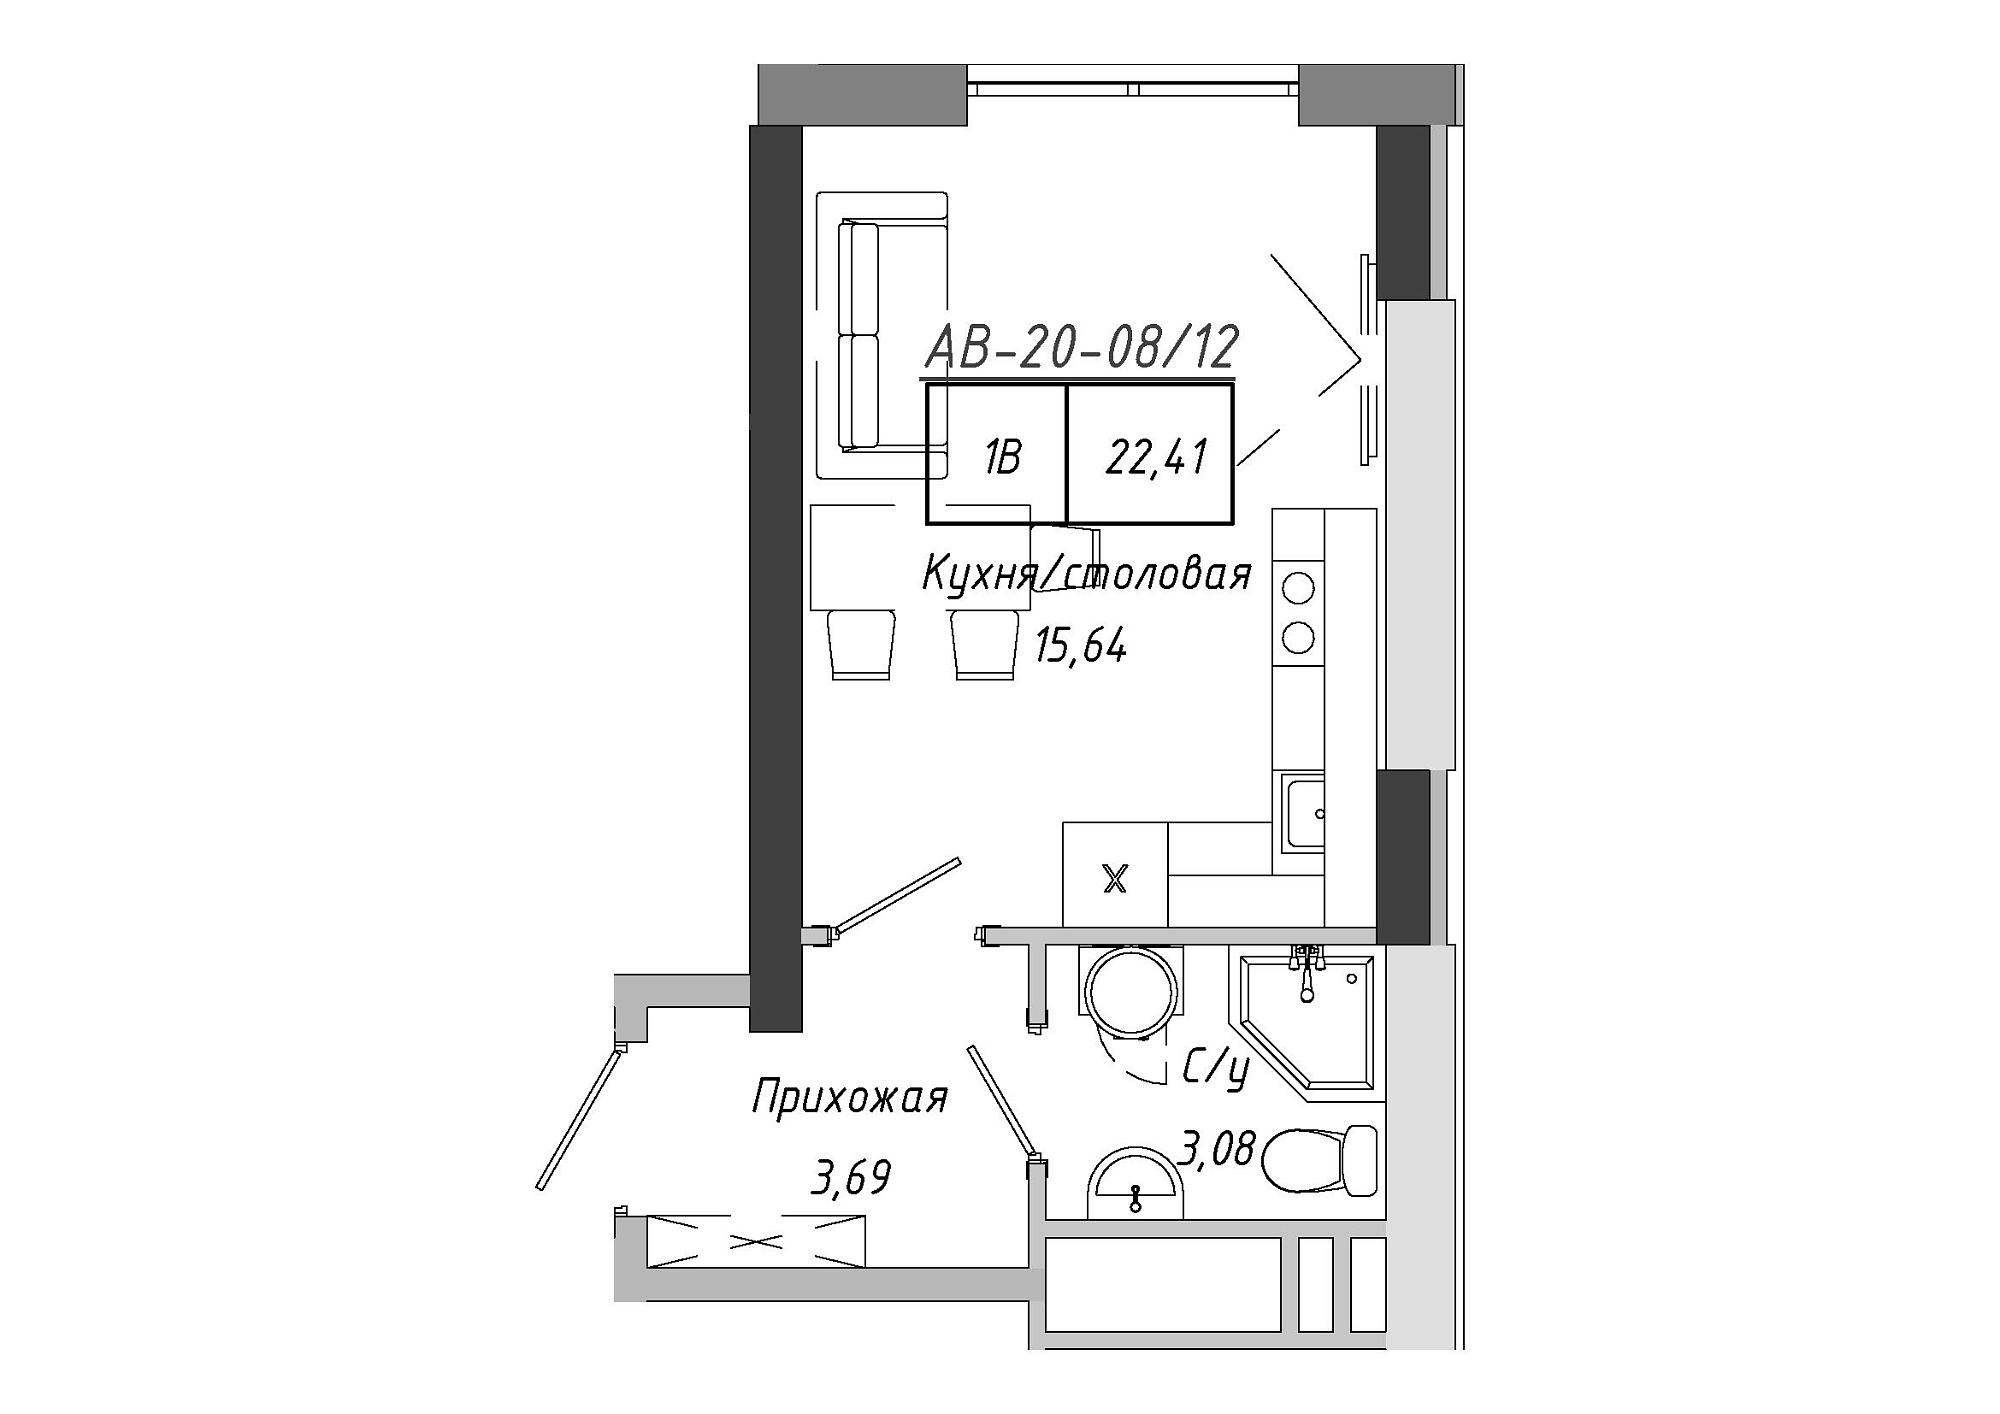 Planning Smart flats area 21.87m2, AB-20-08/00012.